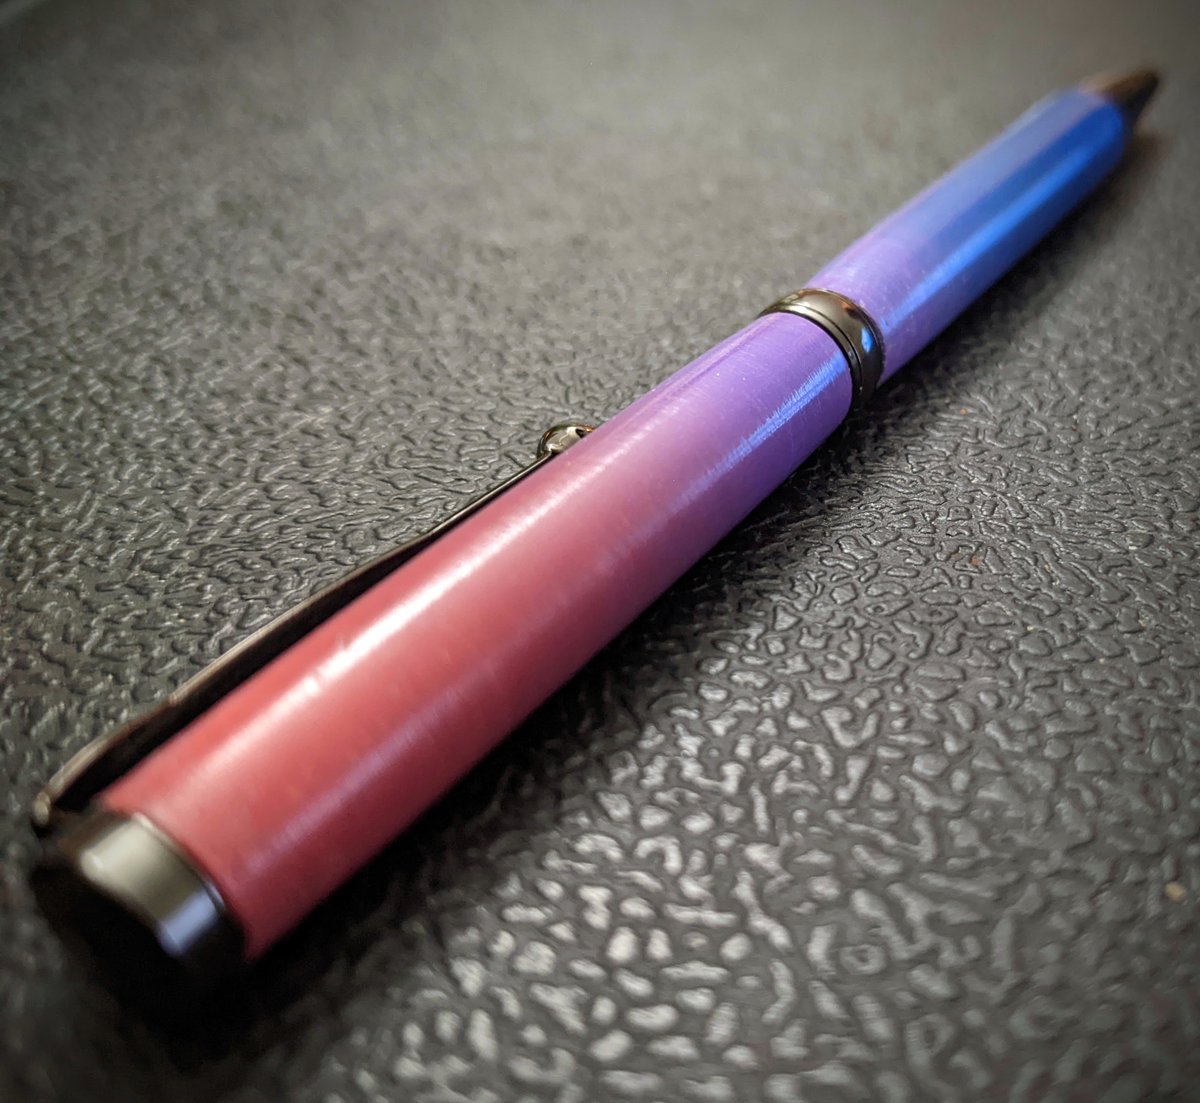 I made a pen for Pride! Polymer clay, gunmetal slimline kit. 
#penturning #bisexual